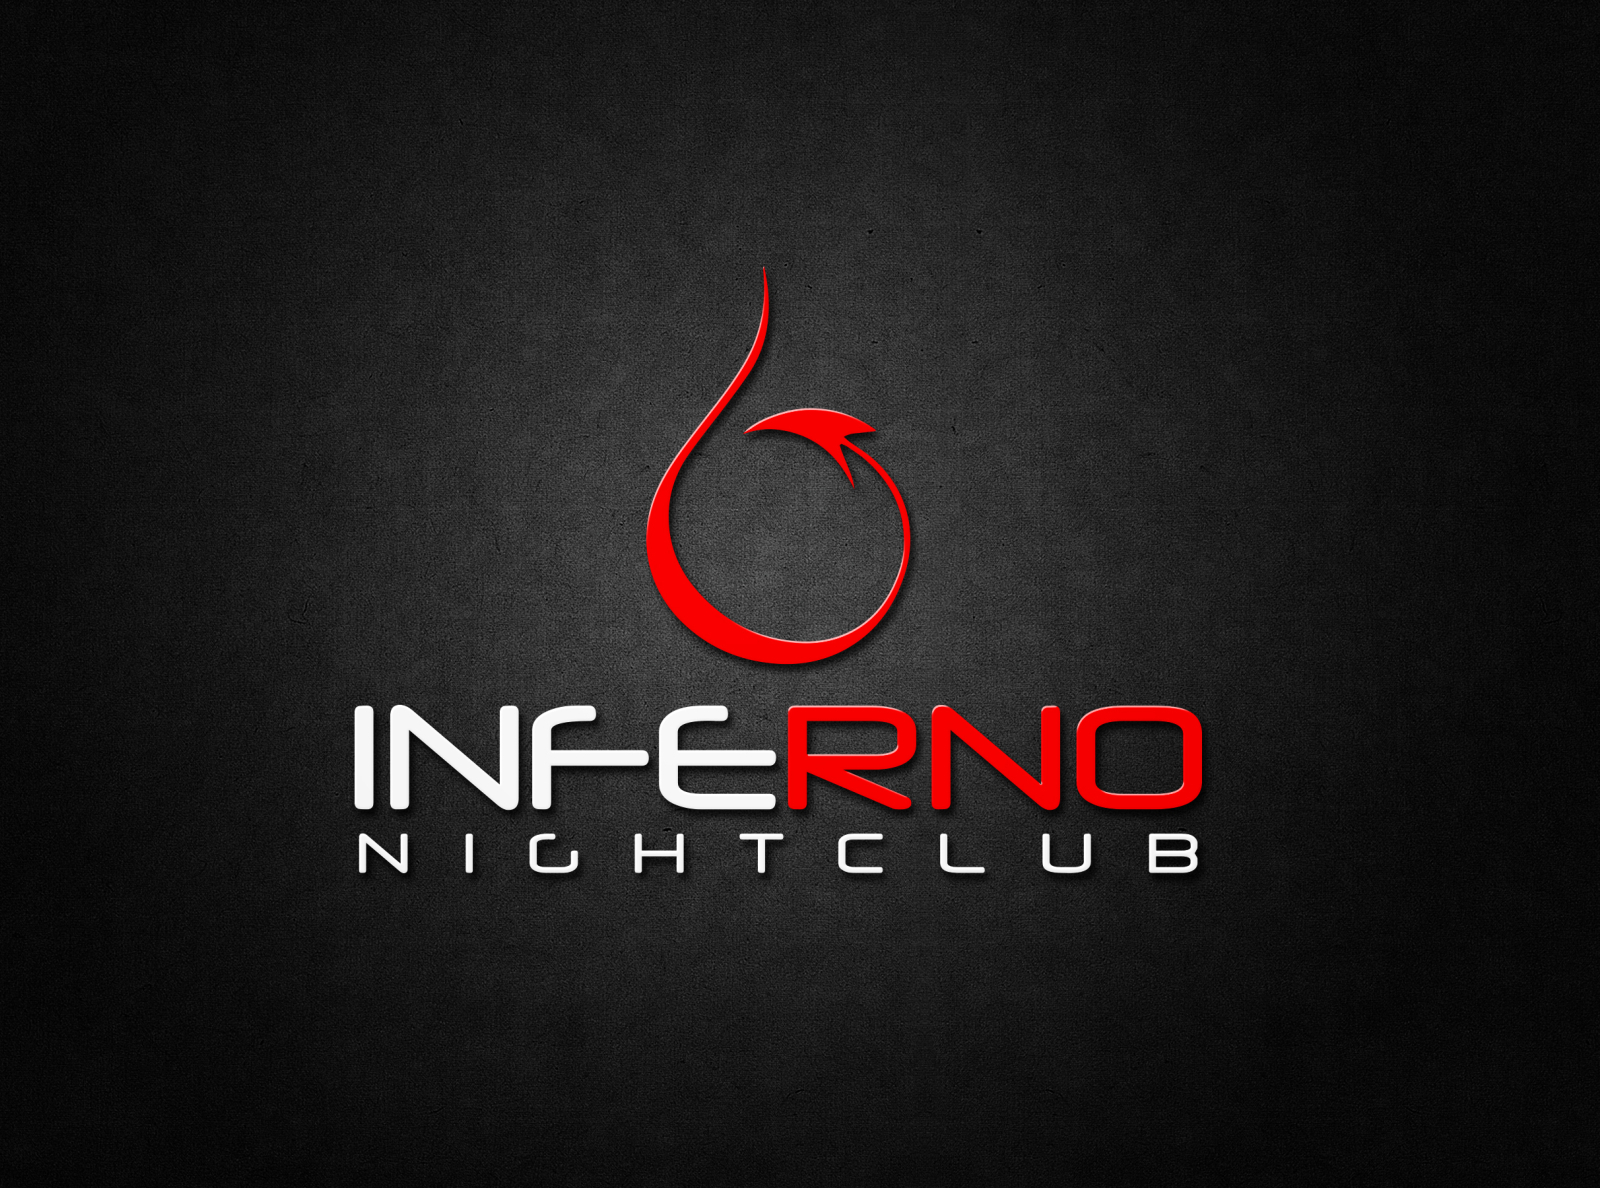 Modern night club logo design by Mostafijur Rahman on Dribbble